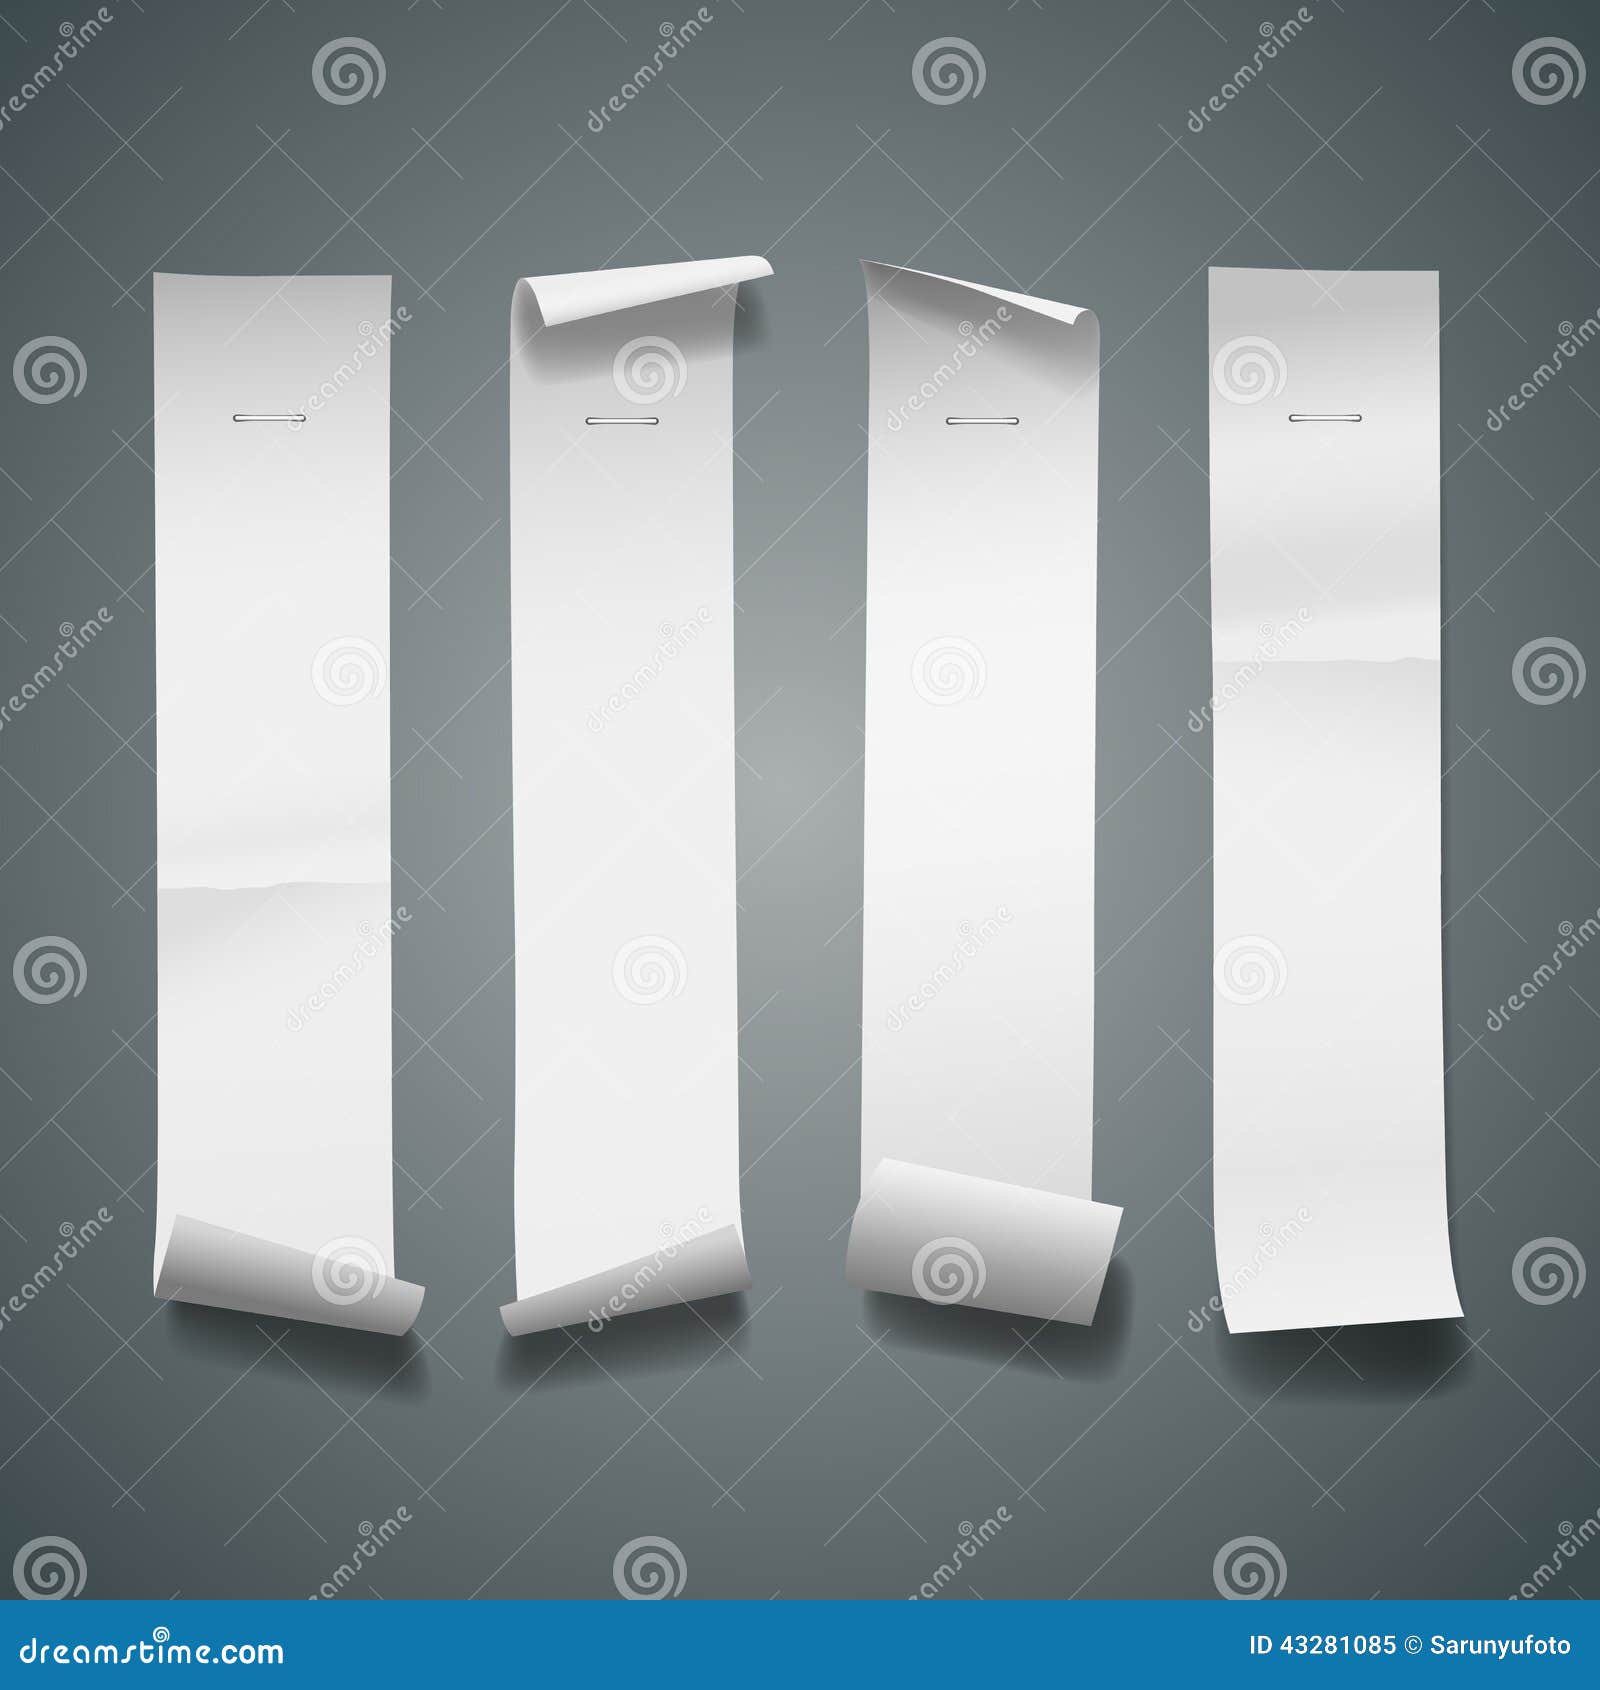 White Paper Roll Long Size Vertical Design Stock Vector